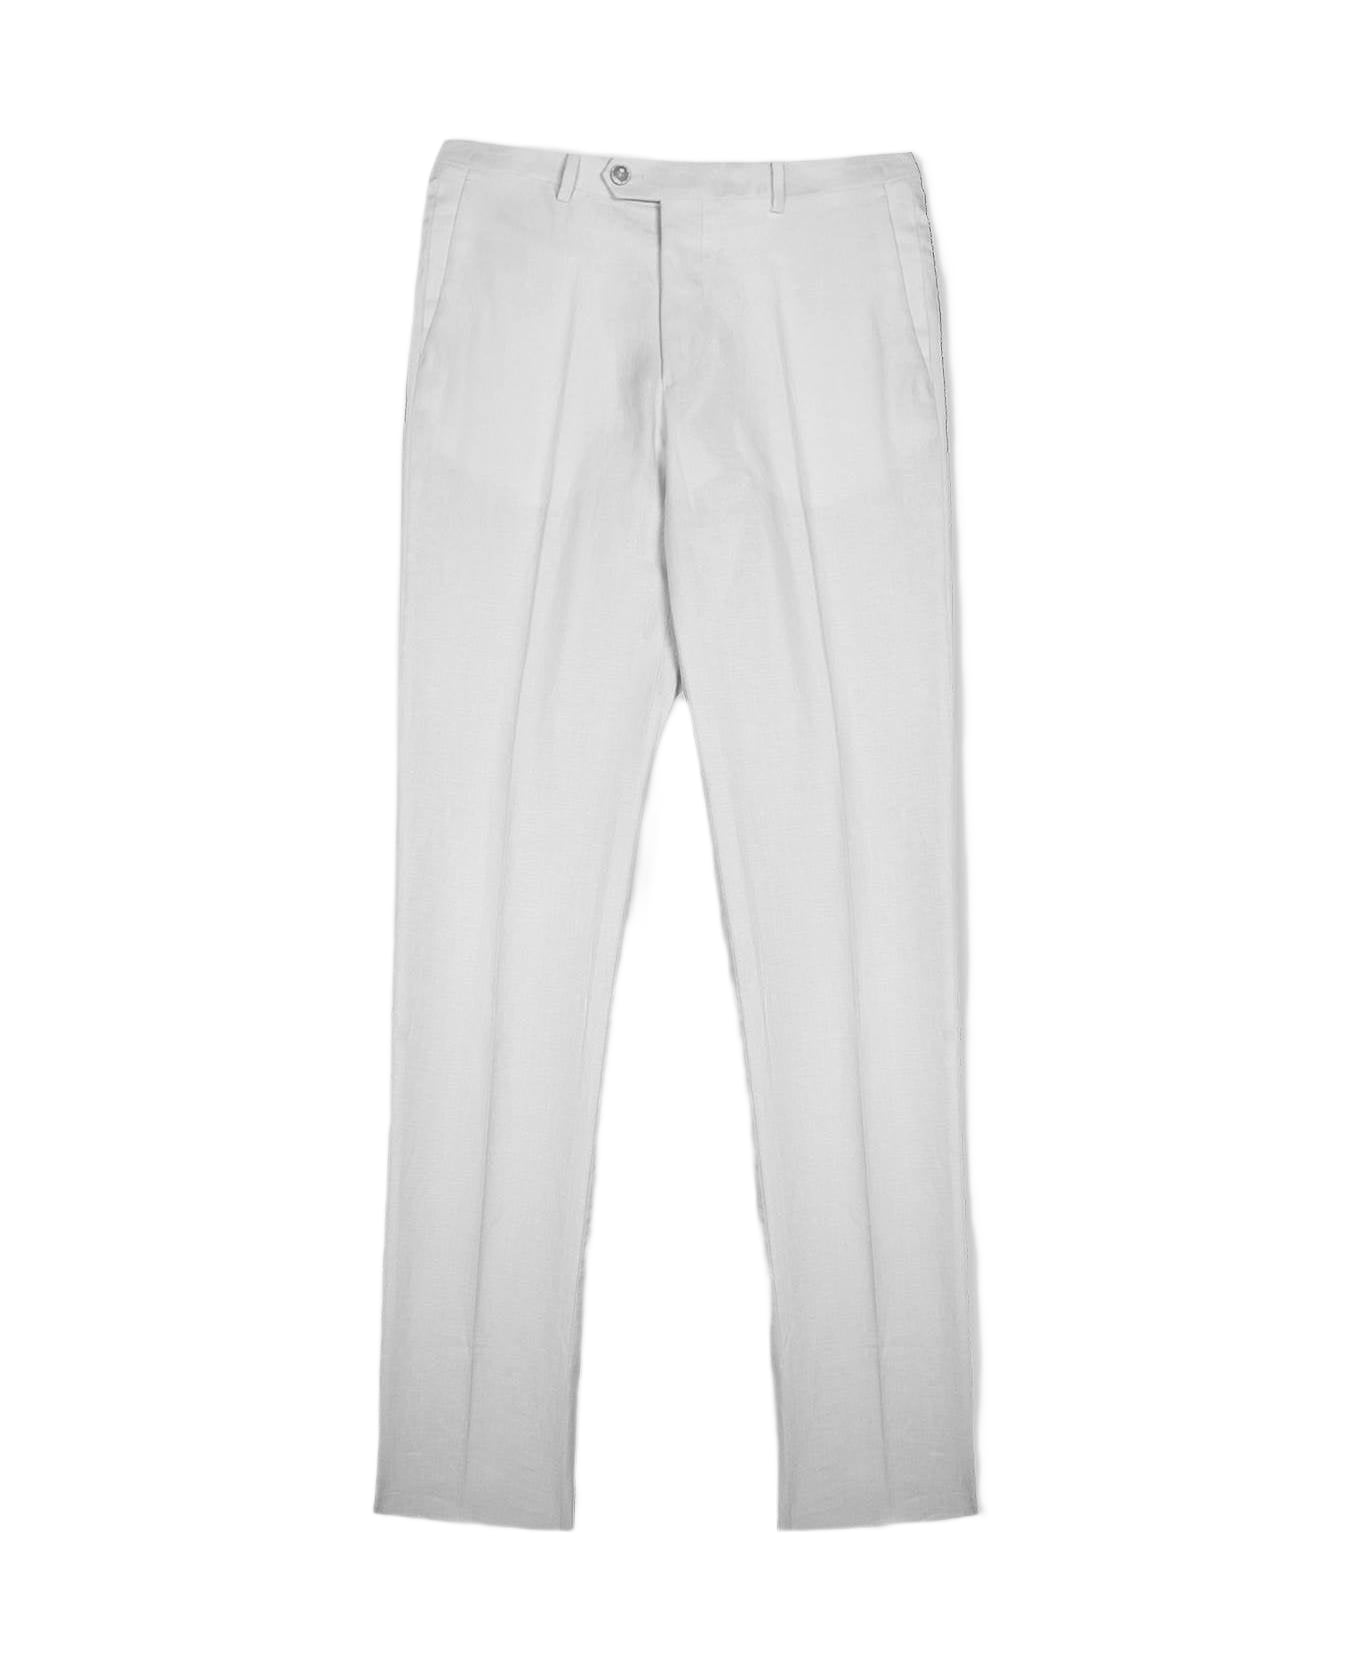 Larusmiani Trousers Portofino Pants - White